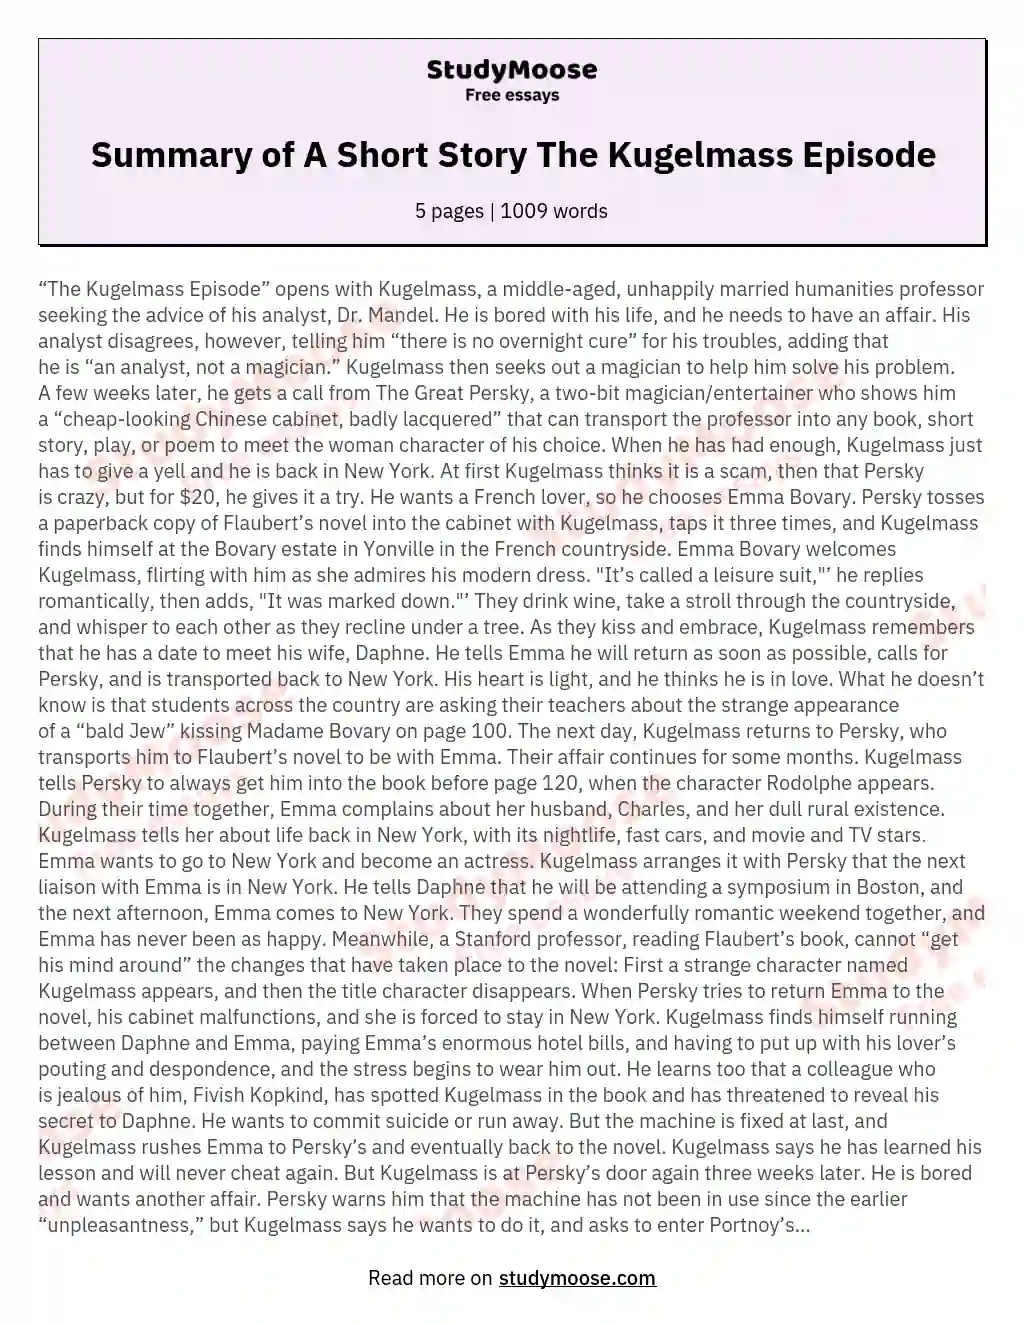 Summary of A Short Story The Kugelmass Episode essay